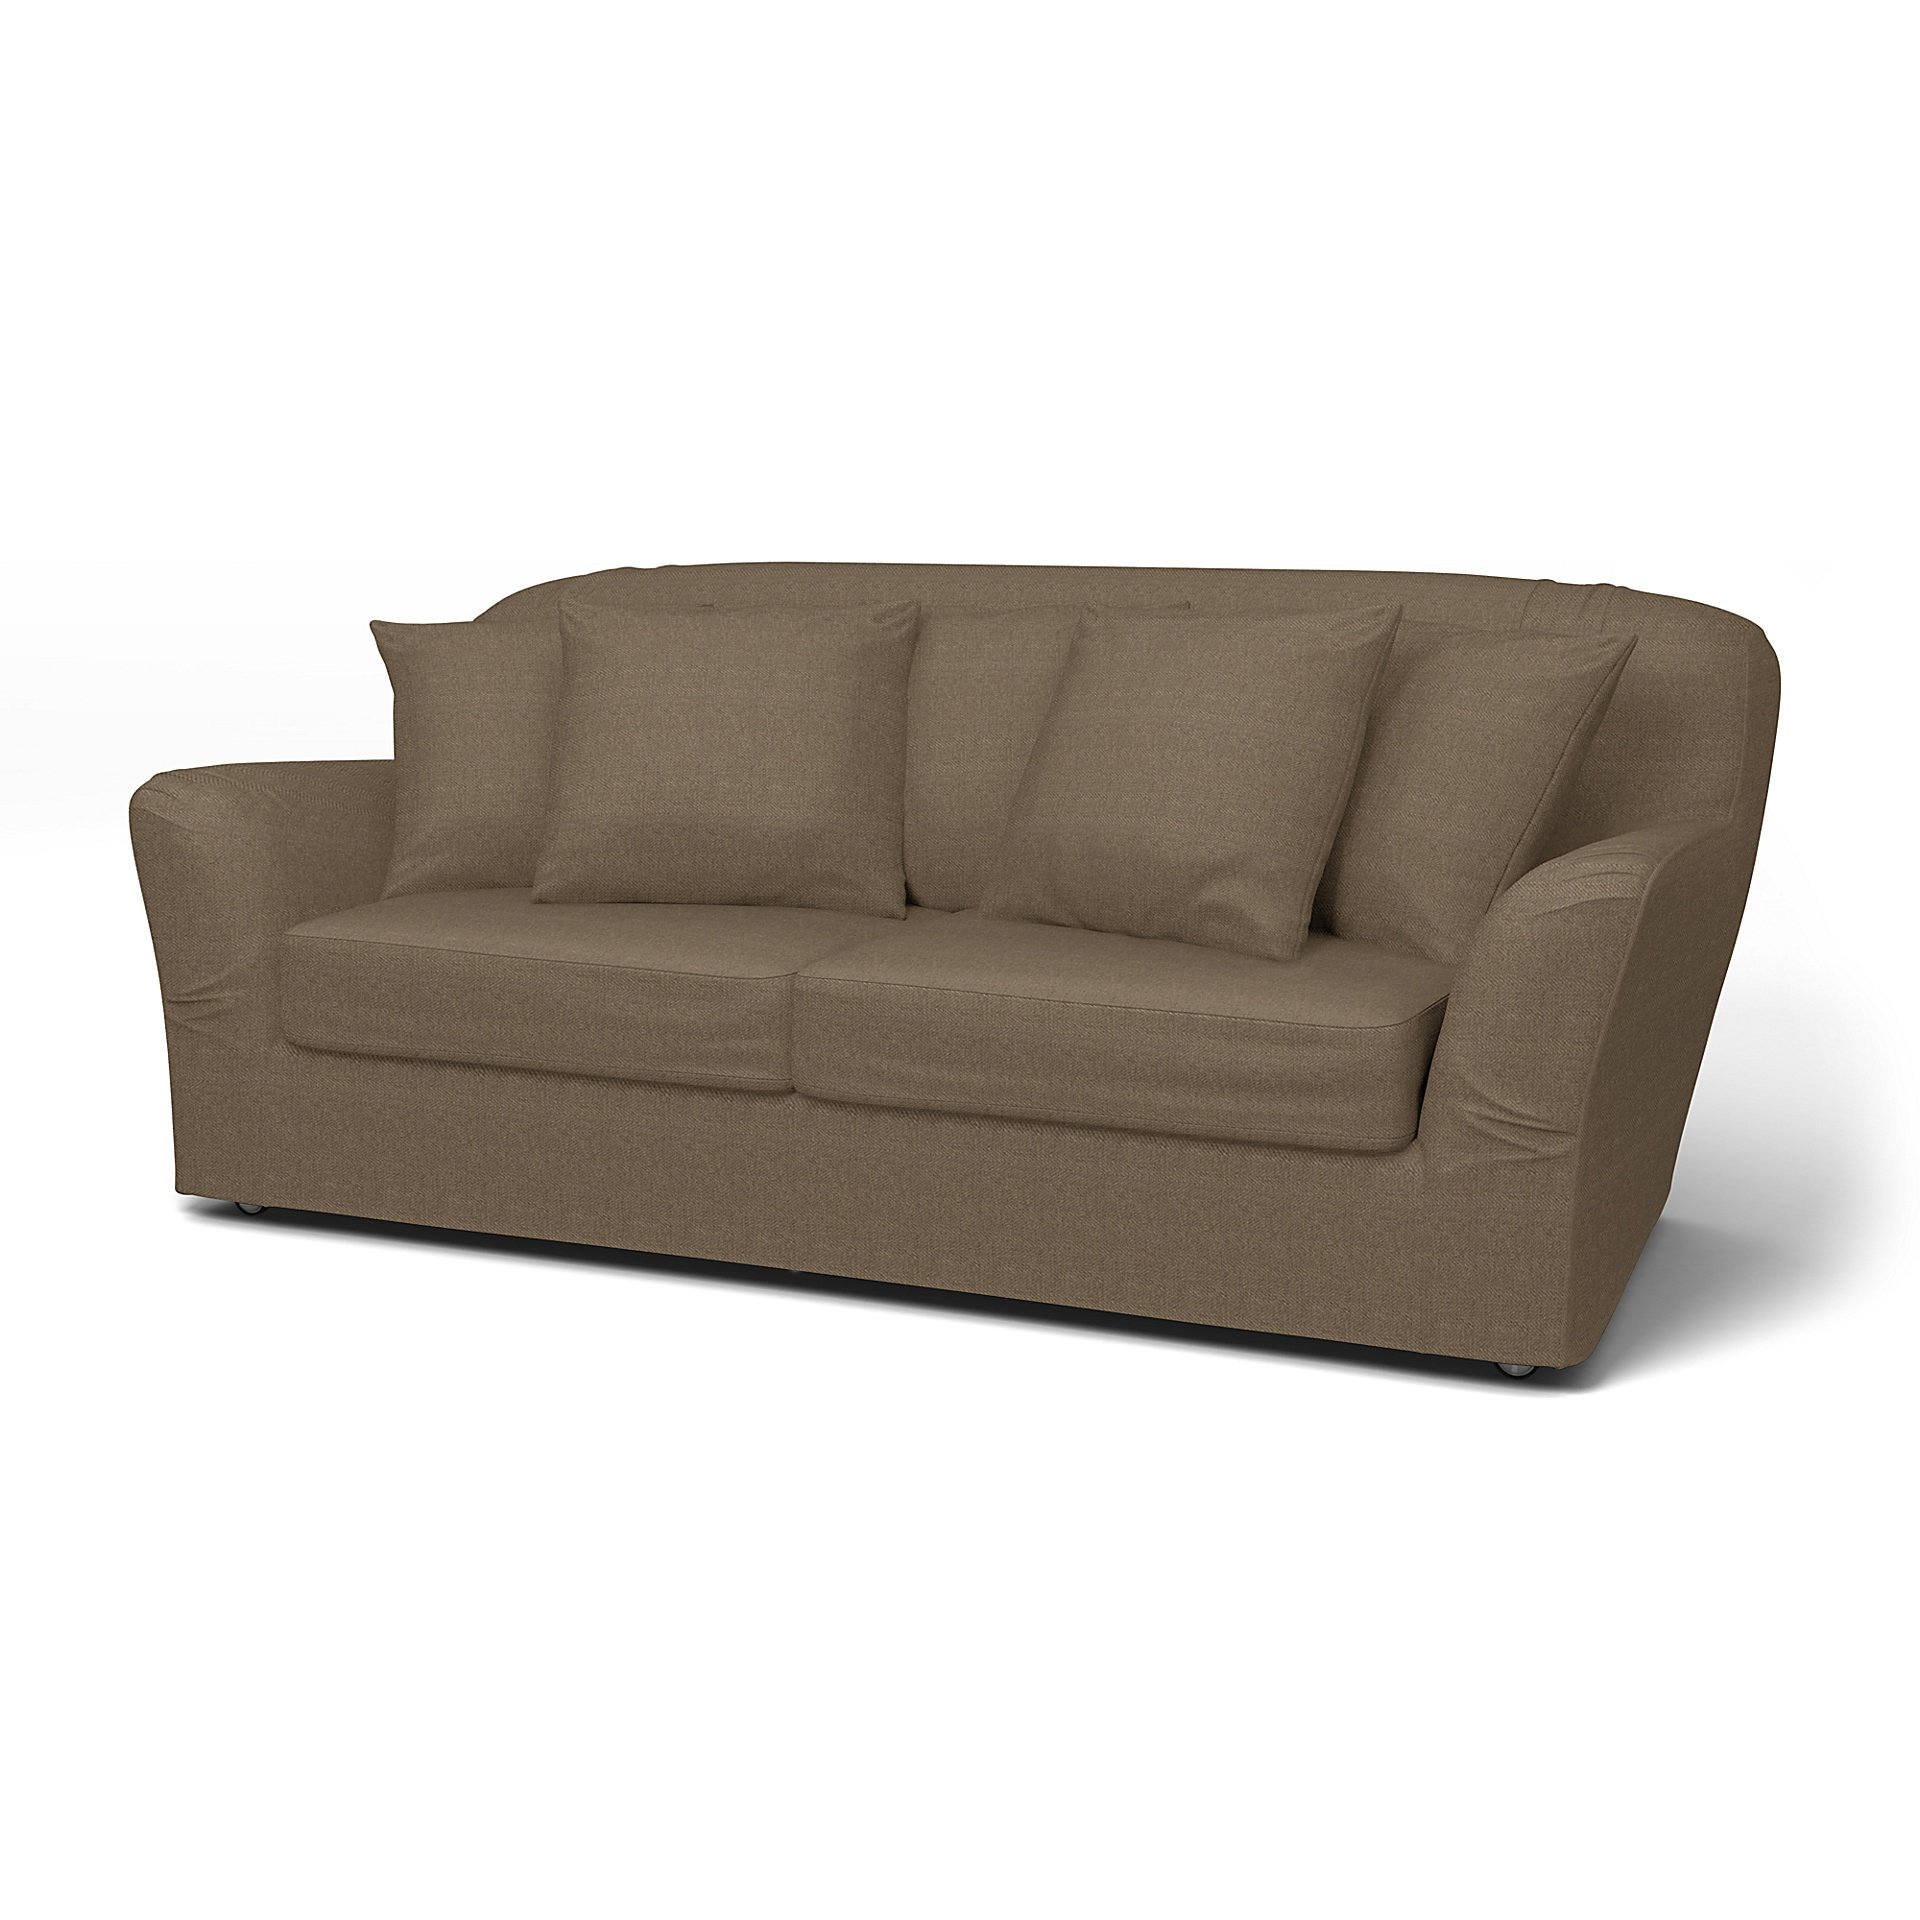 IKEA - Tomelilla Sofa Bed Cover (Small model), Dark Taupe, Boucle & Texture - Bemz